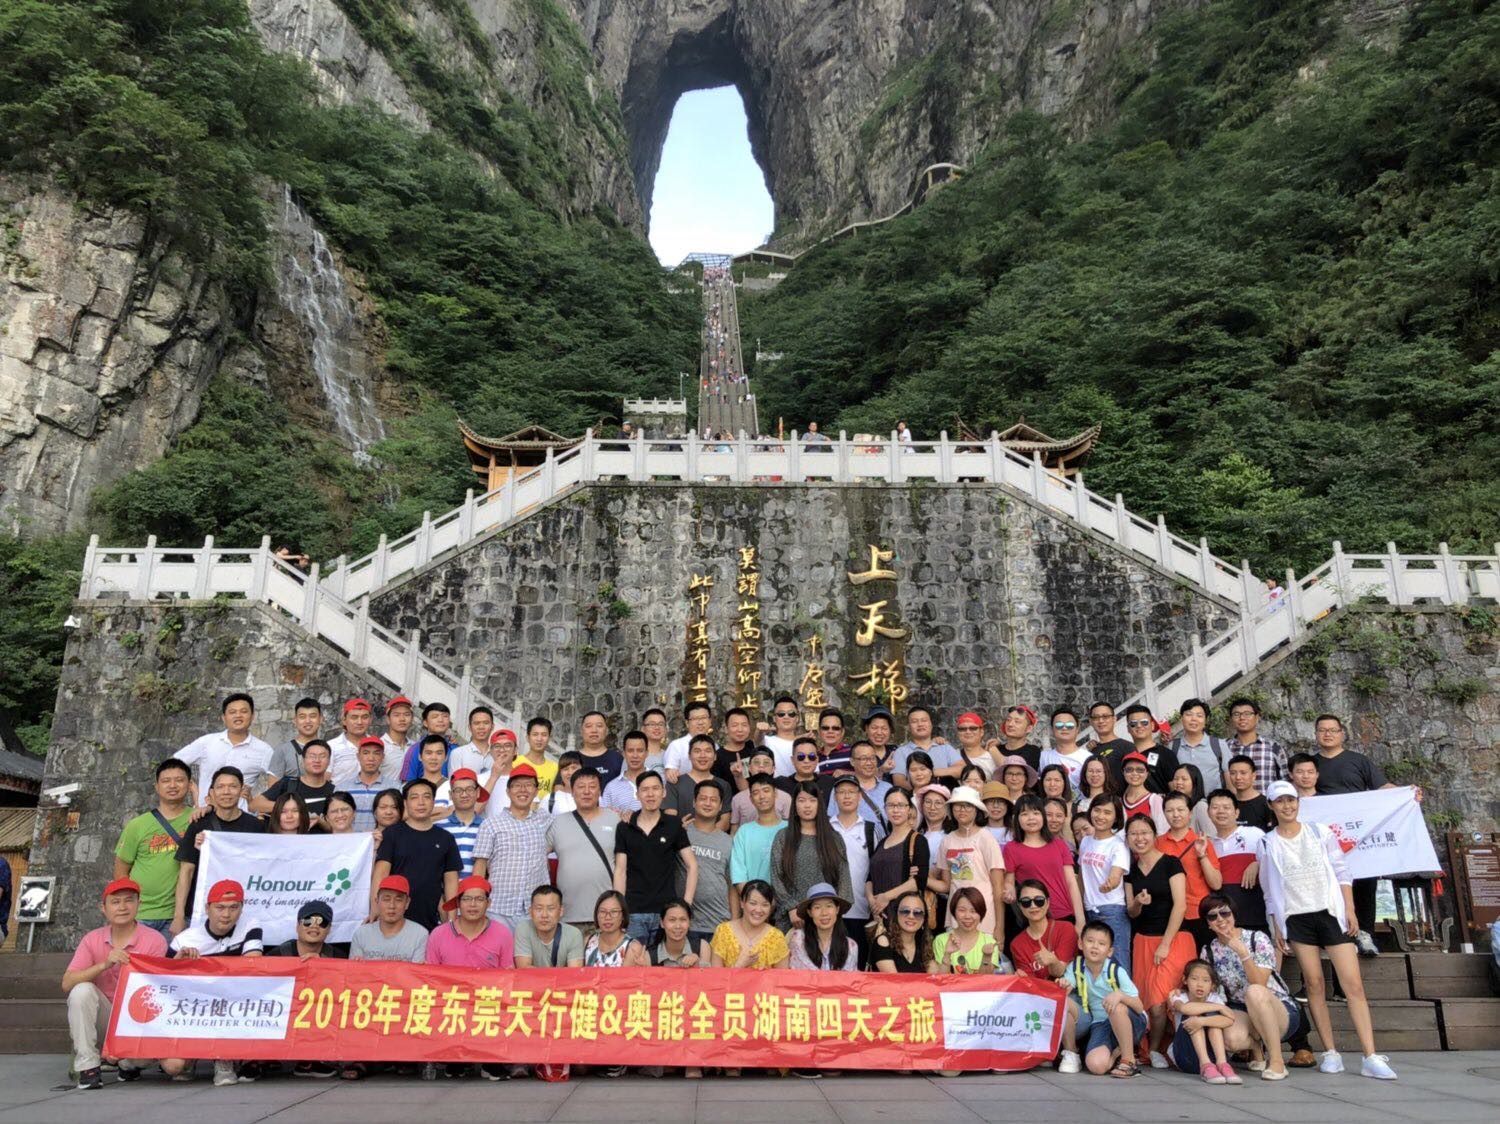 2018 Dongguan Skyfighter & Honour team's four-day trip to Hunan1